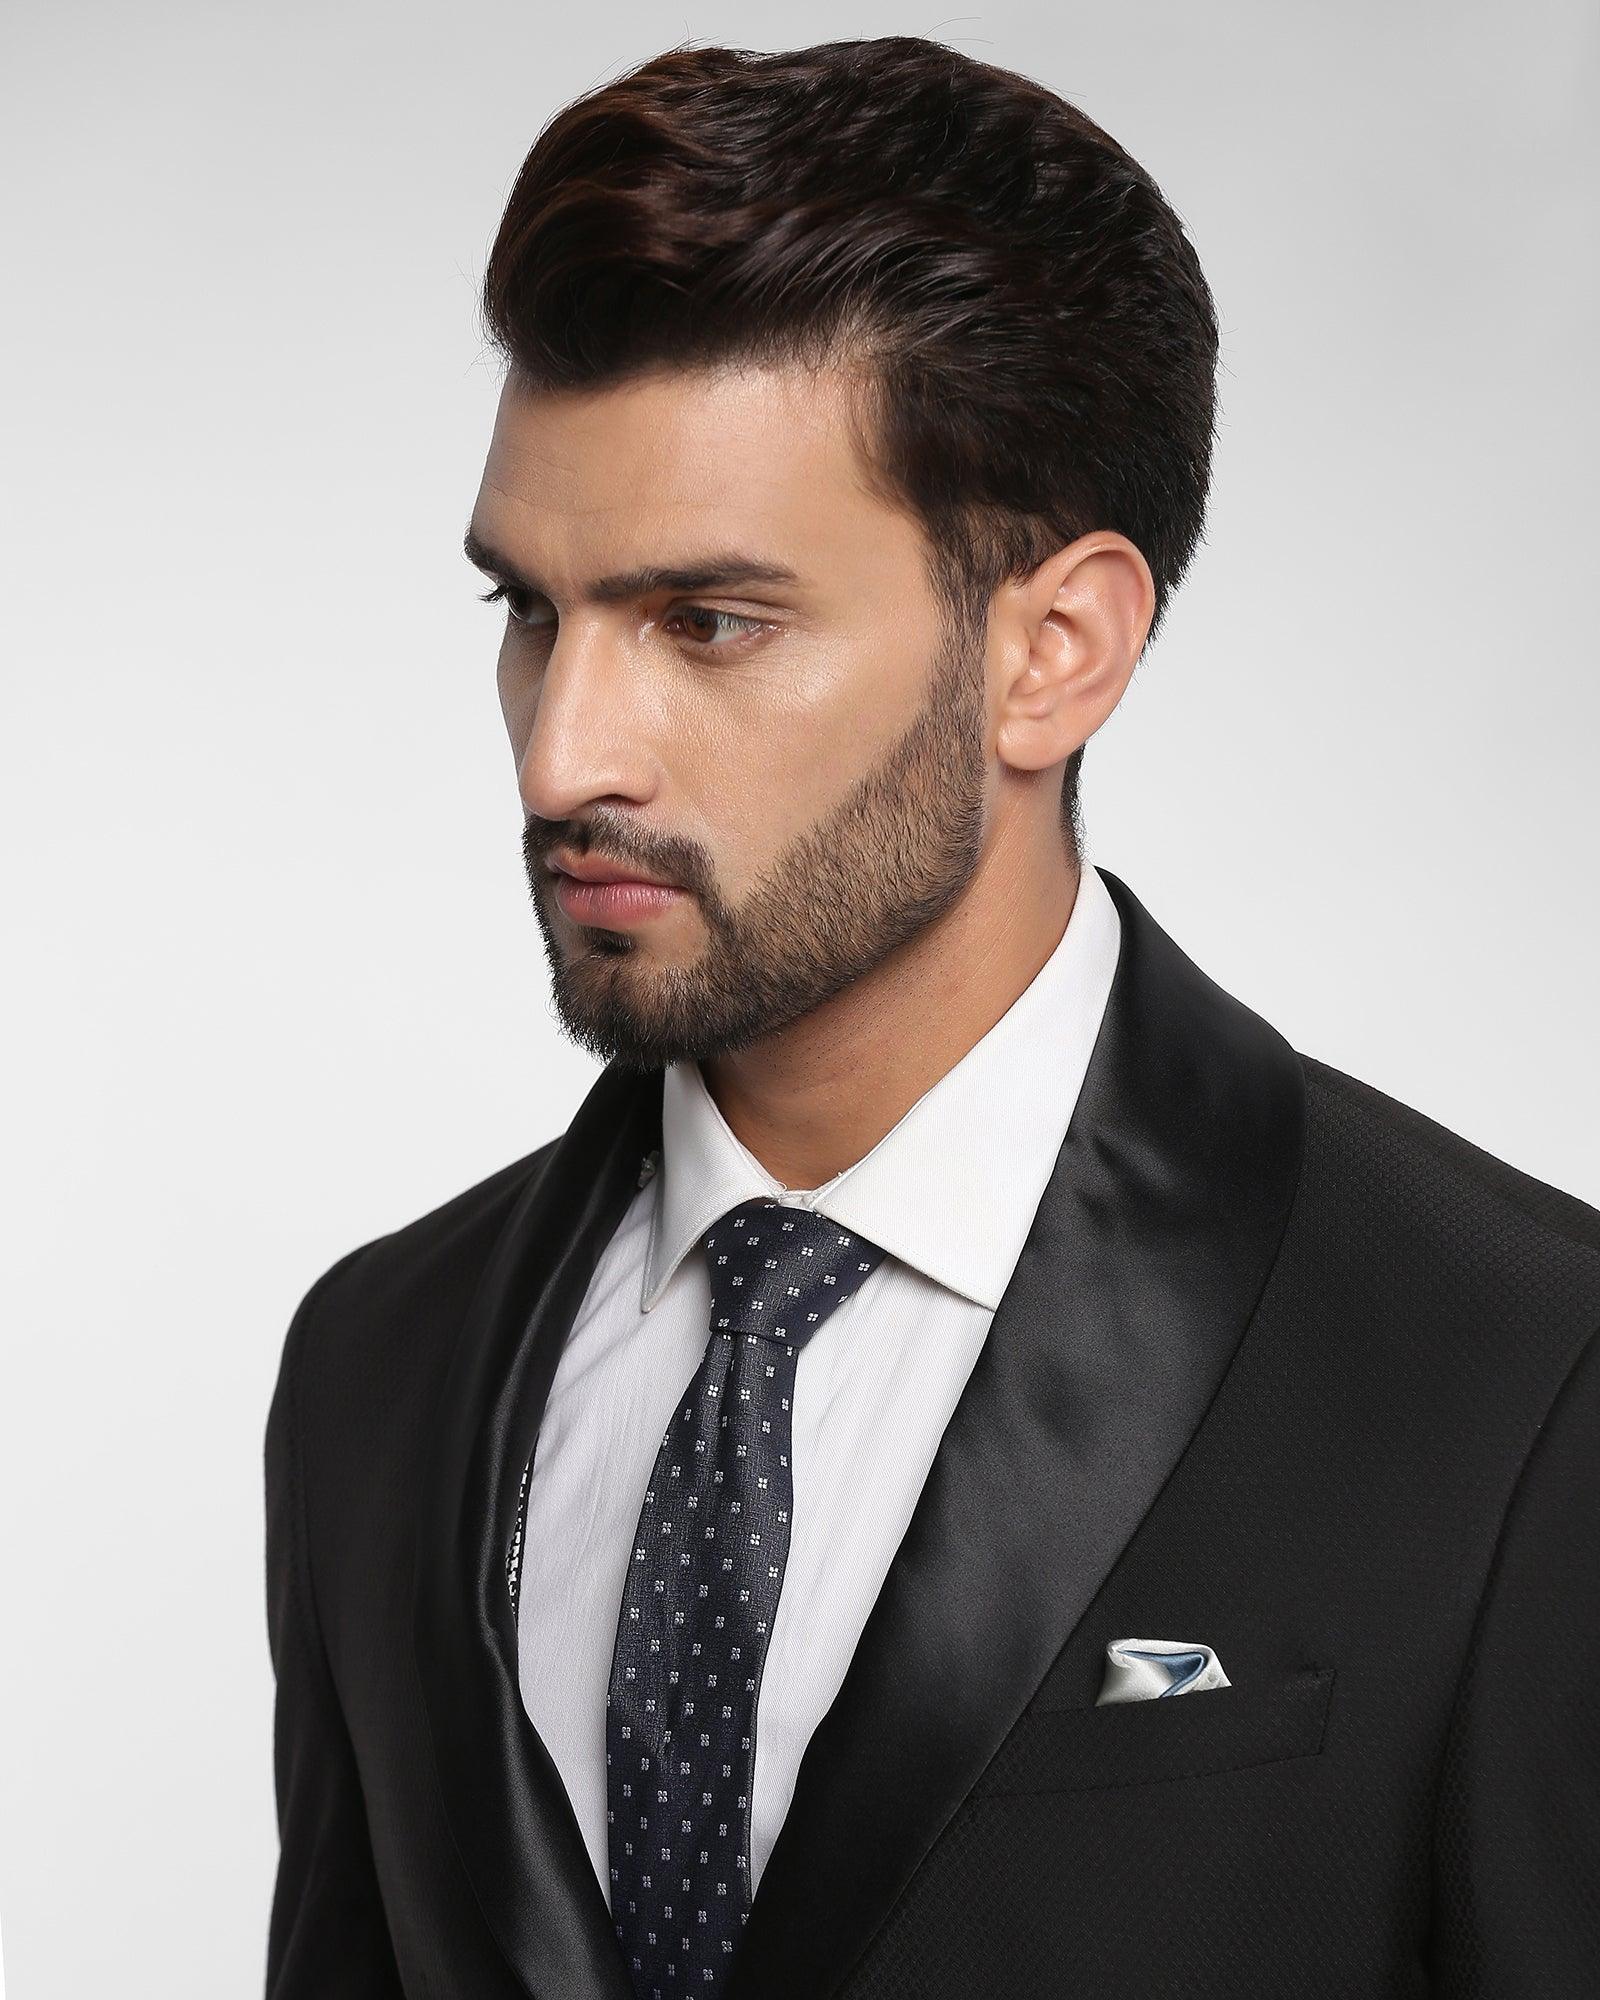 Tuxedo Three Piece Black Textured Formal Suit - Blakus